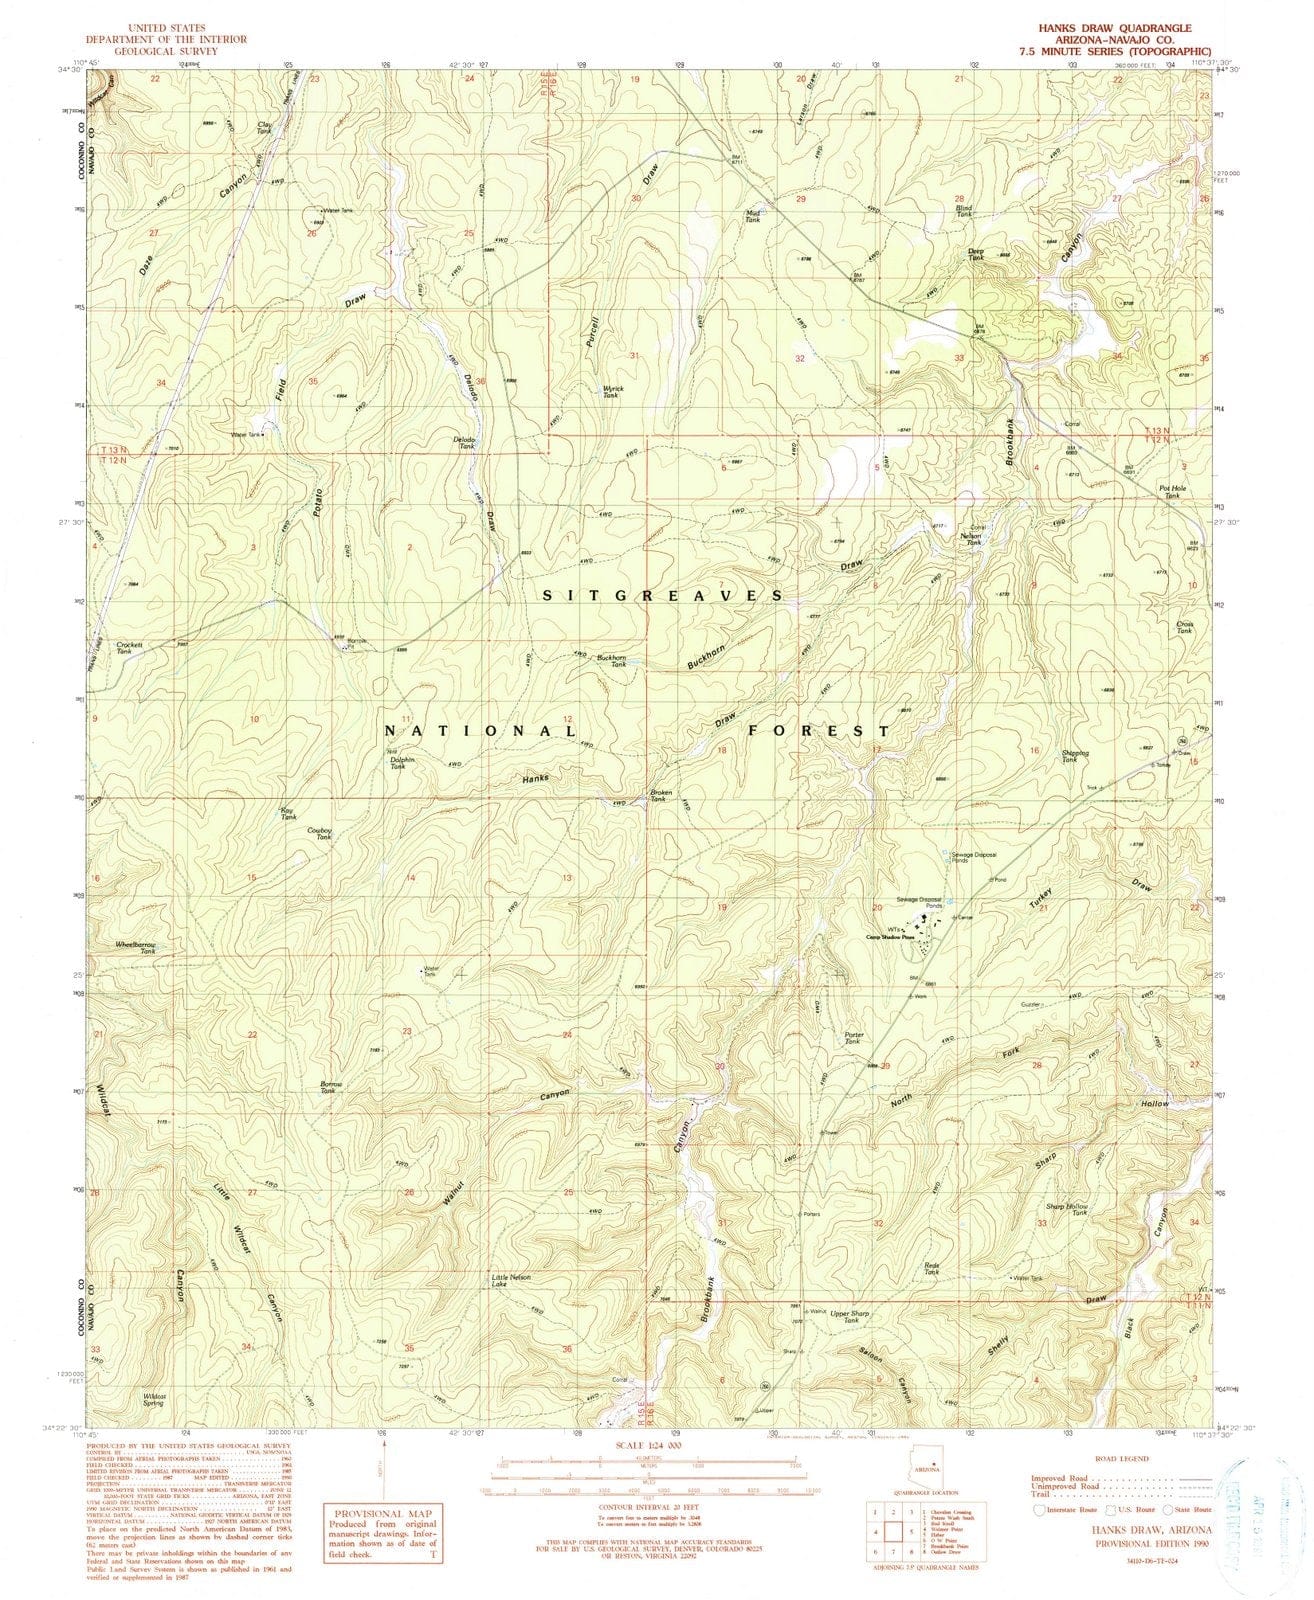 1990 Hanksraw, AZ - Arizona - USGS Topographic Map